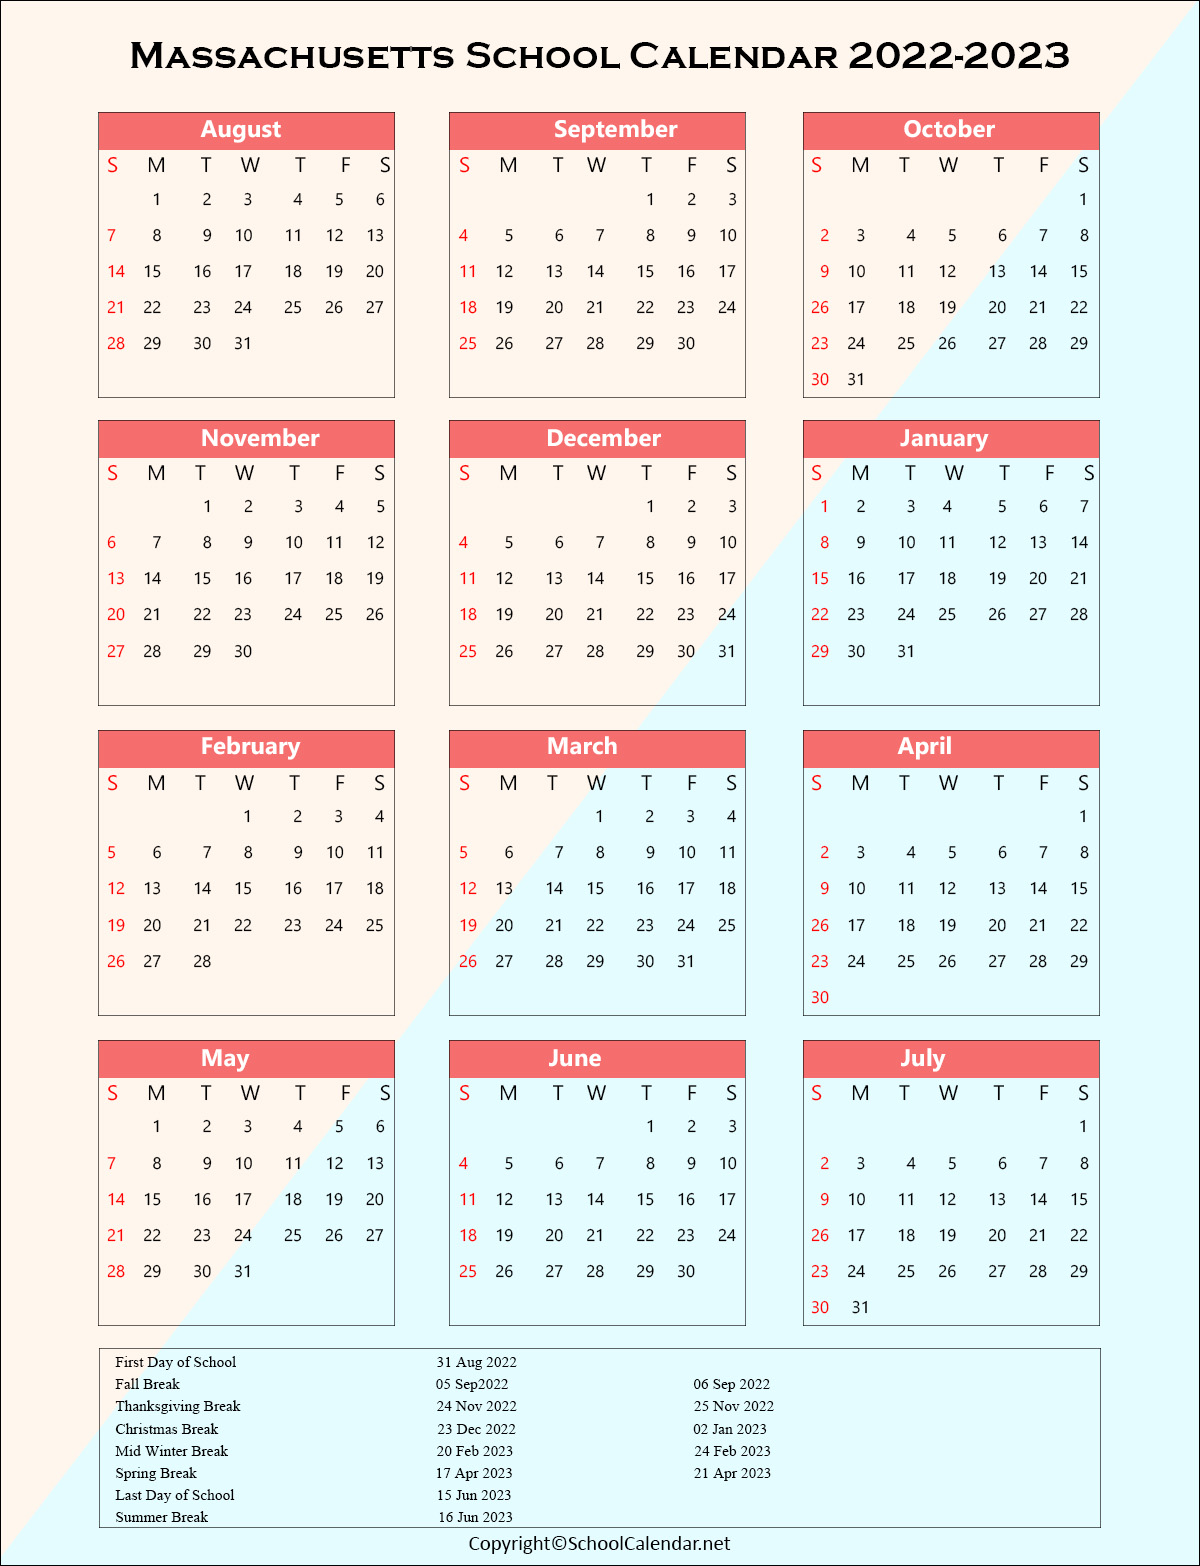 Massachusetts School Holiday Calendar 2022